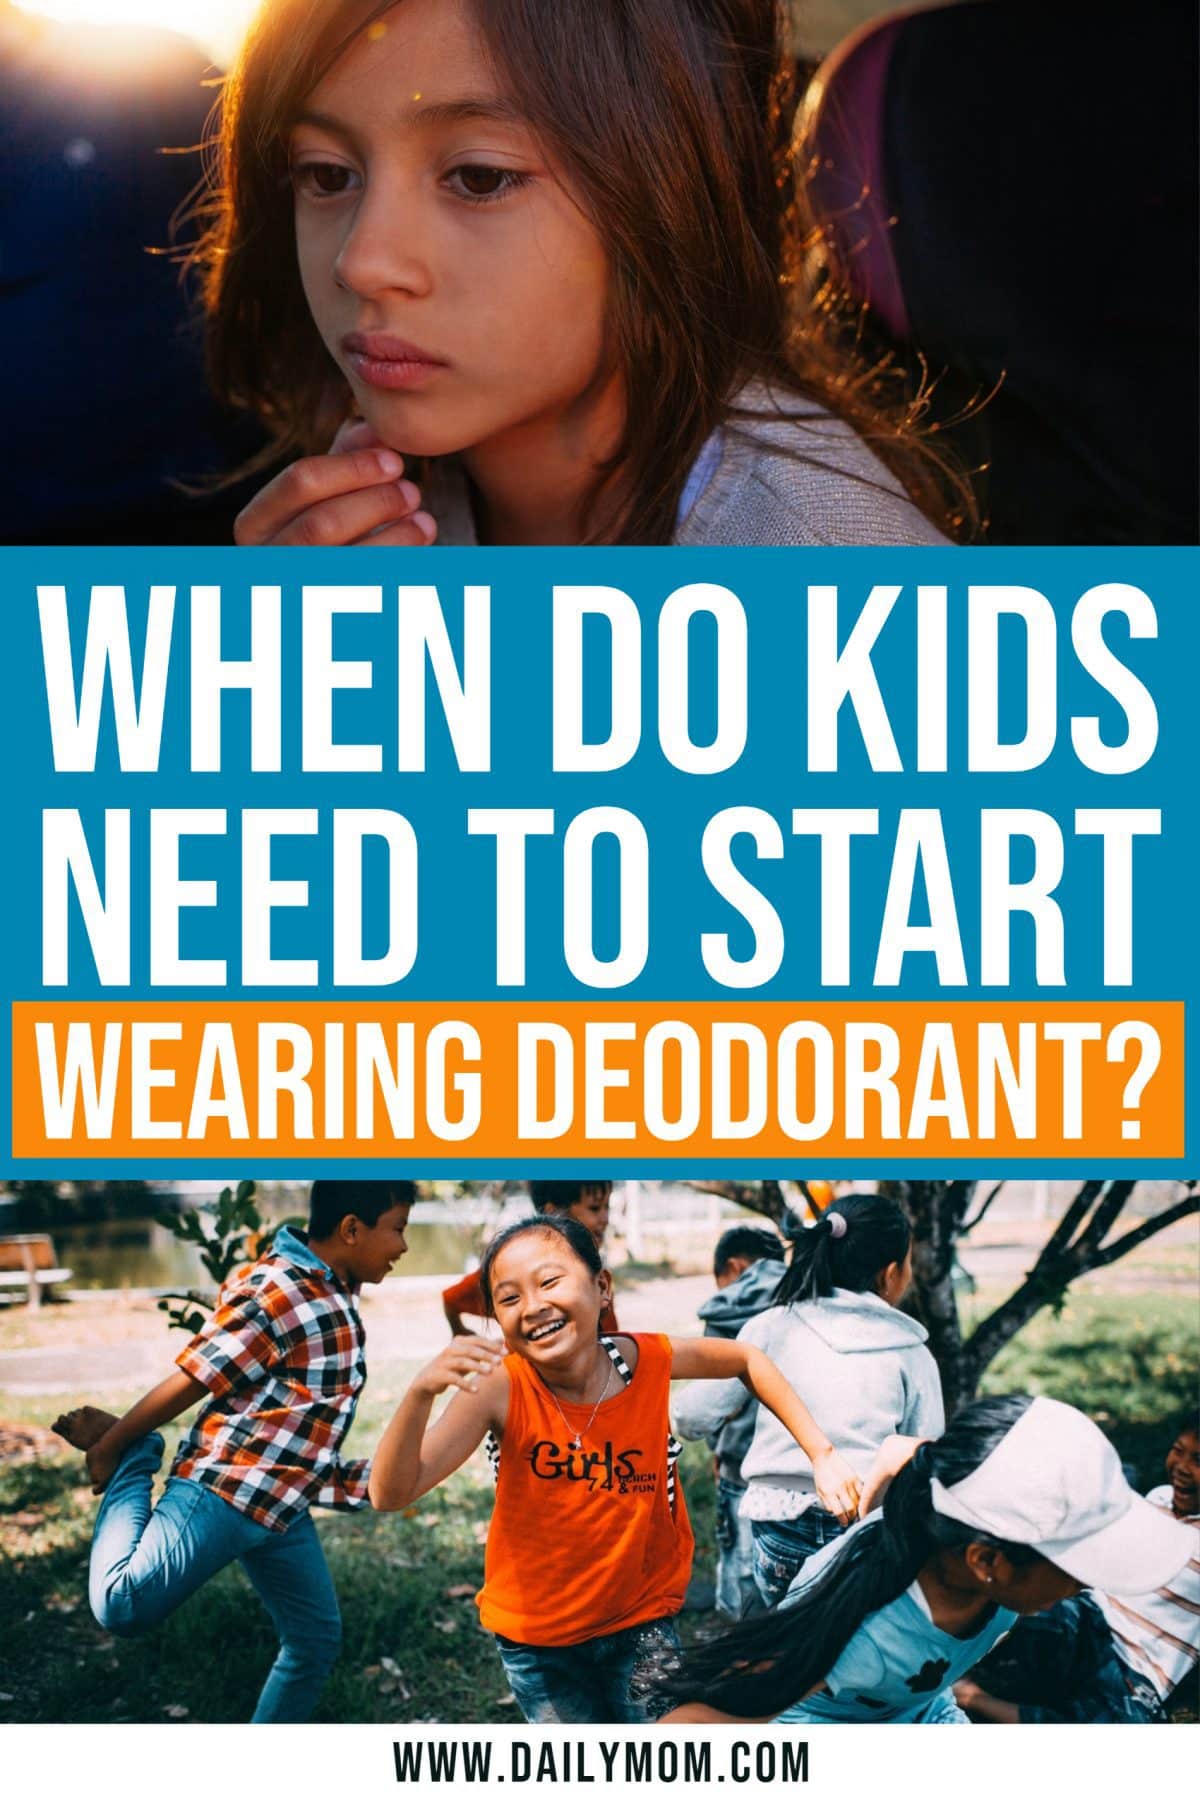 Kids And Deodorant